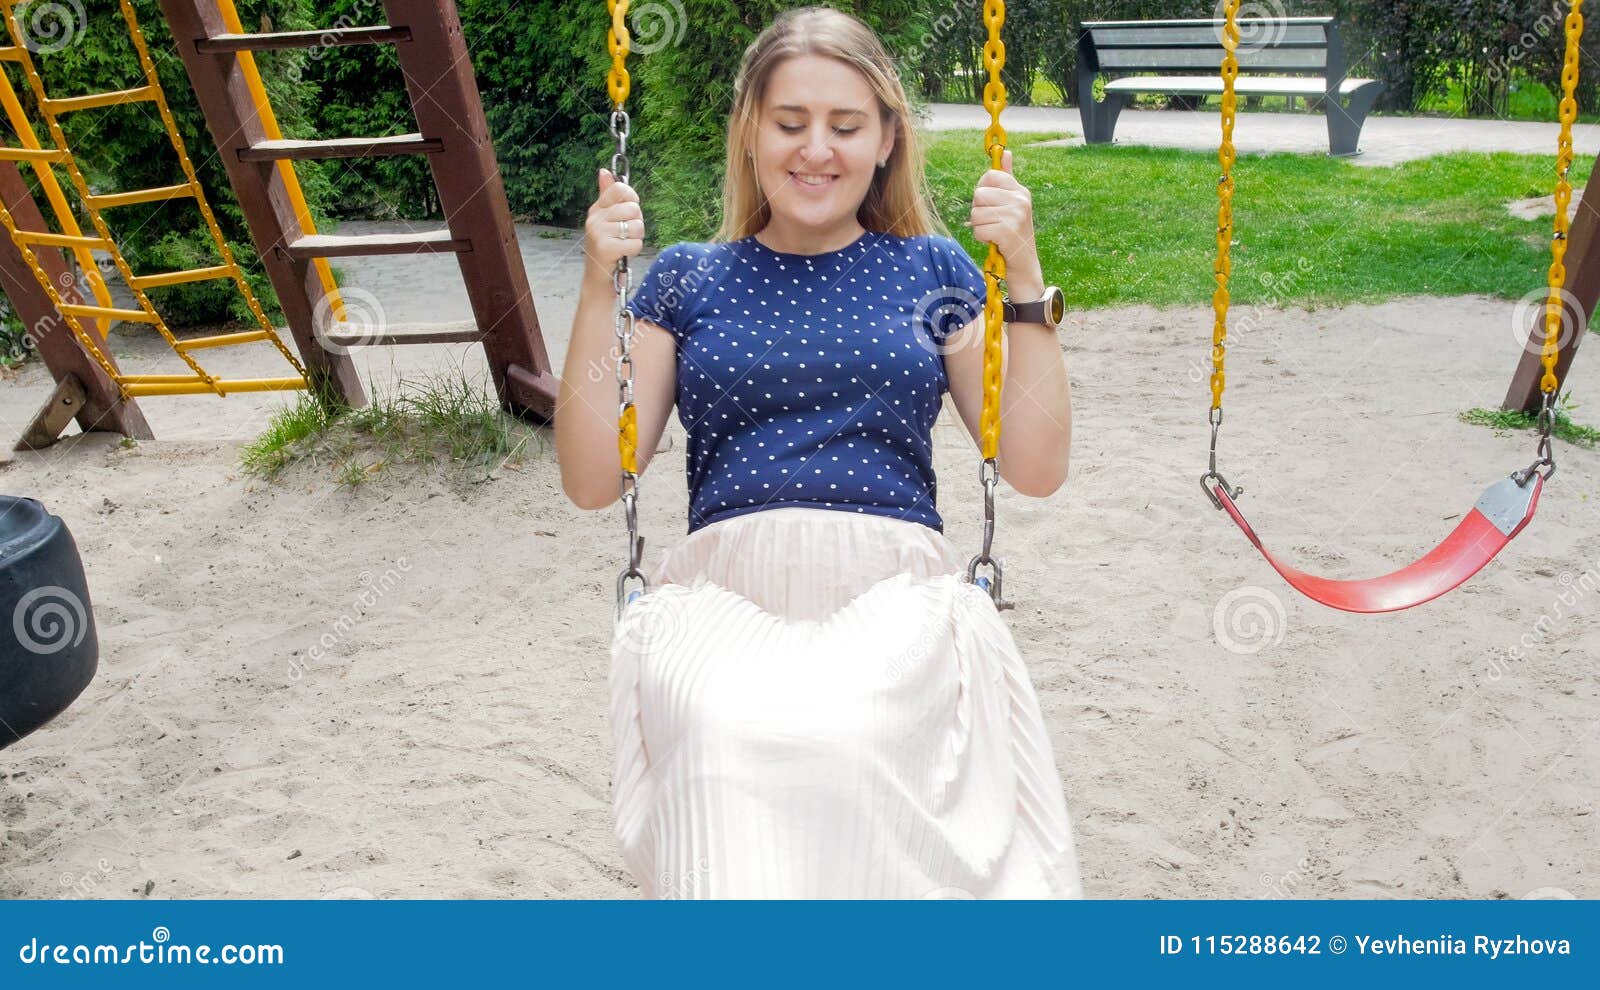 Girl Swinging Swing In Outdoor Park Nature Stock Photo 